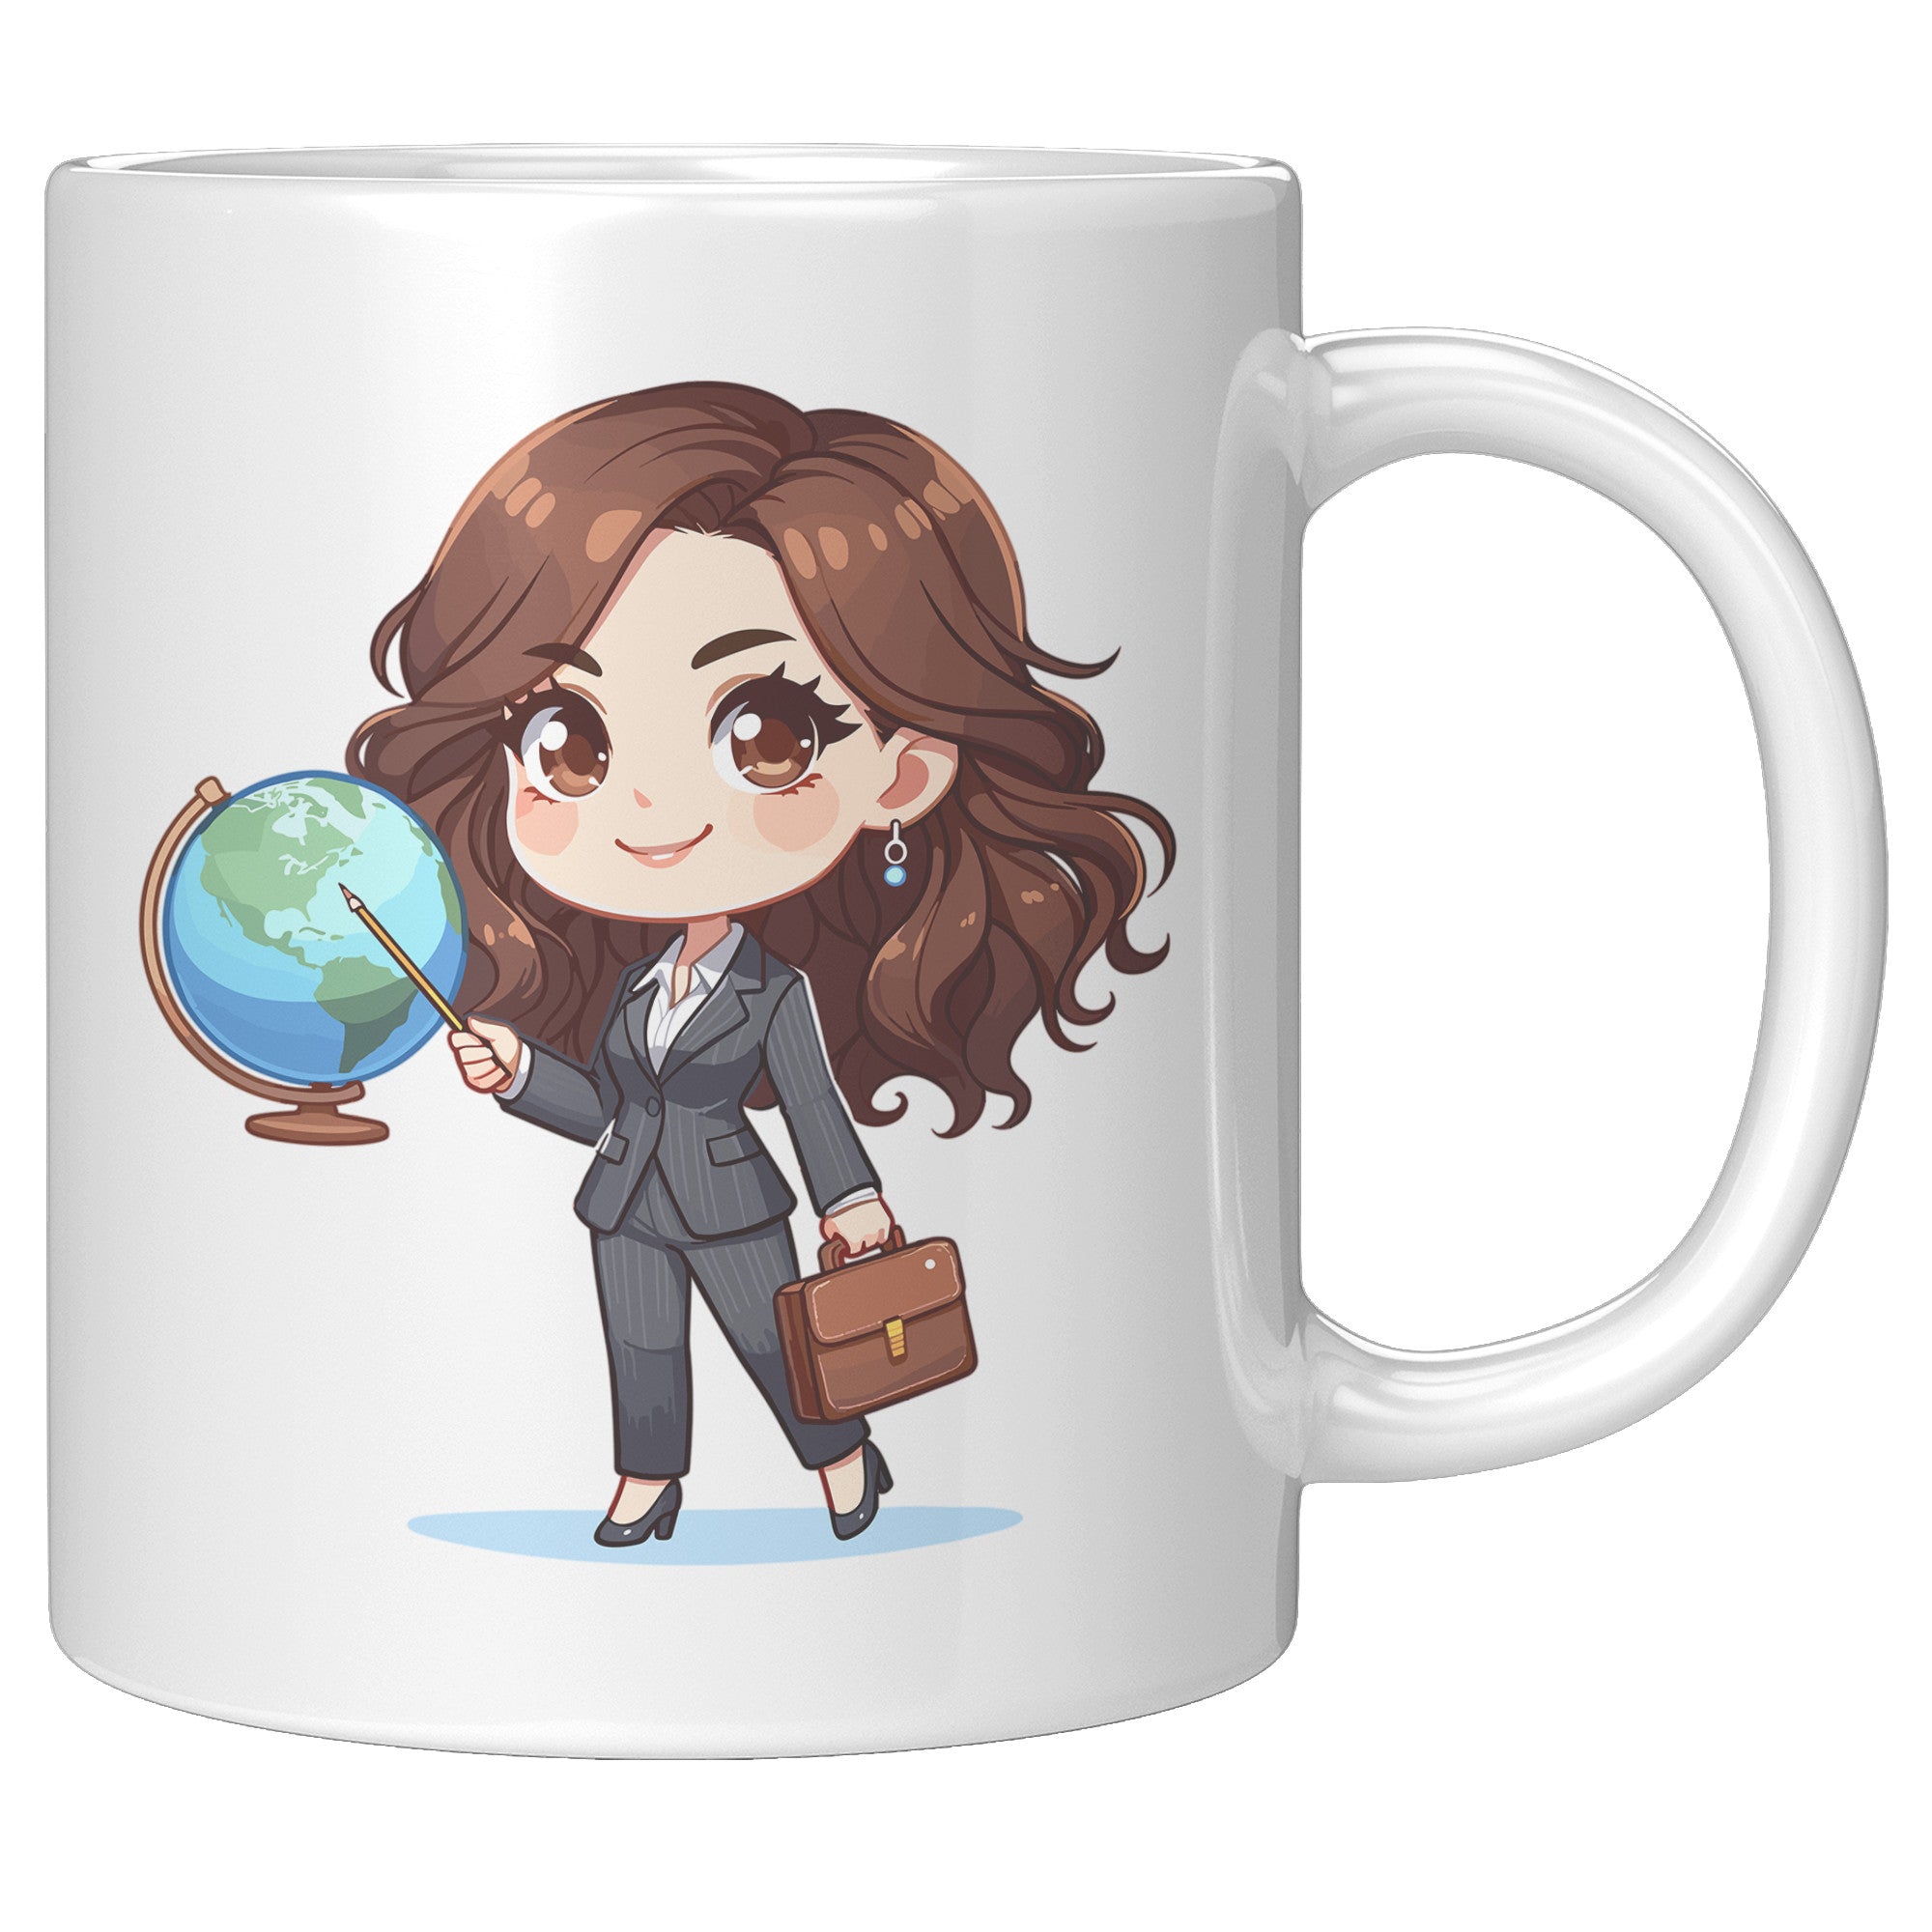 11oz Custom Teacher's Delight Coffee Mug - Cartoon Educator Design - Heartwarming Gift for Teachers - Perfect for Daily Inspiration!